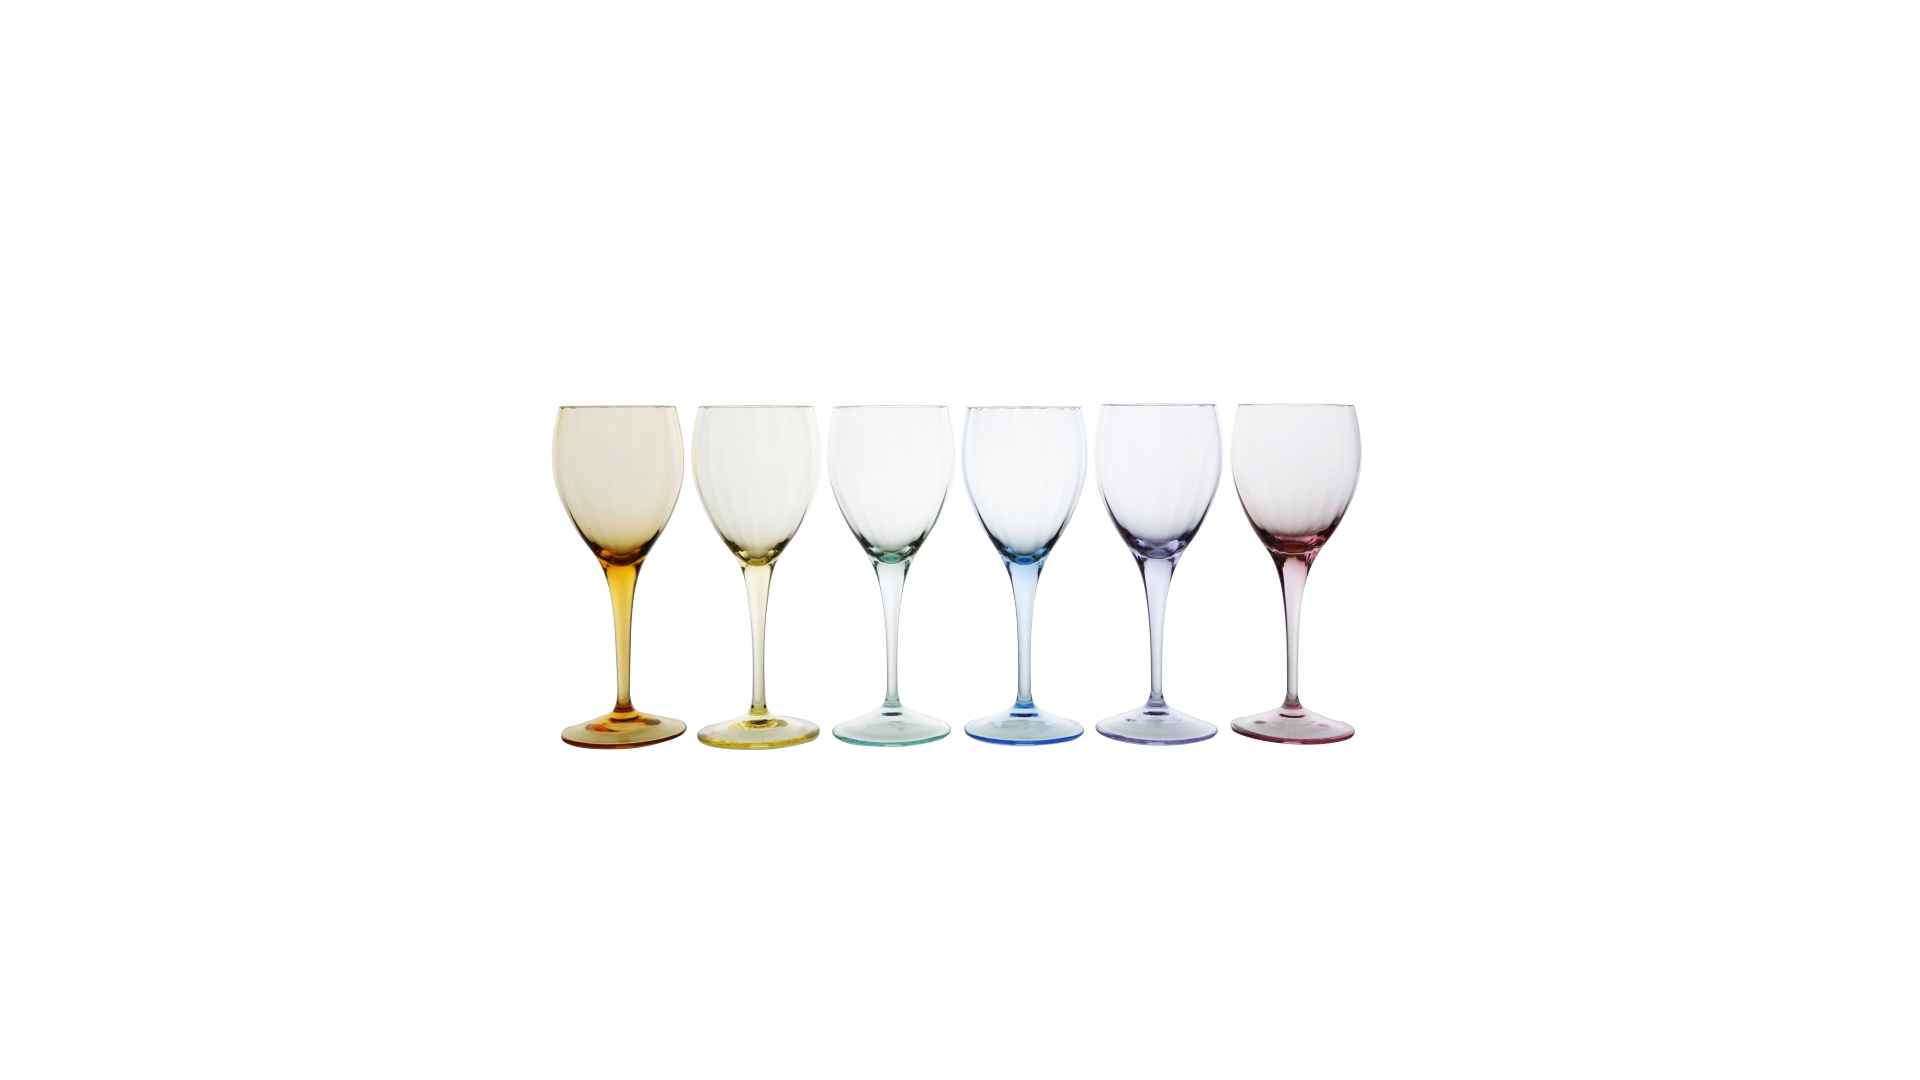 Набор бокалов для красного вина Moser Оптик 350 мл, 6 шт, 6 цветов